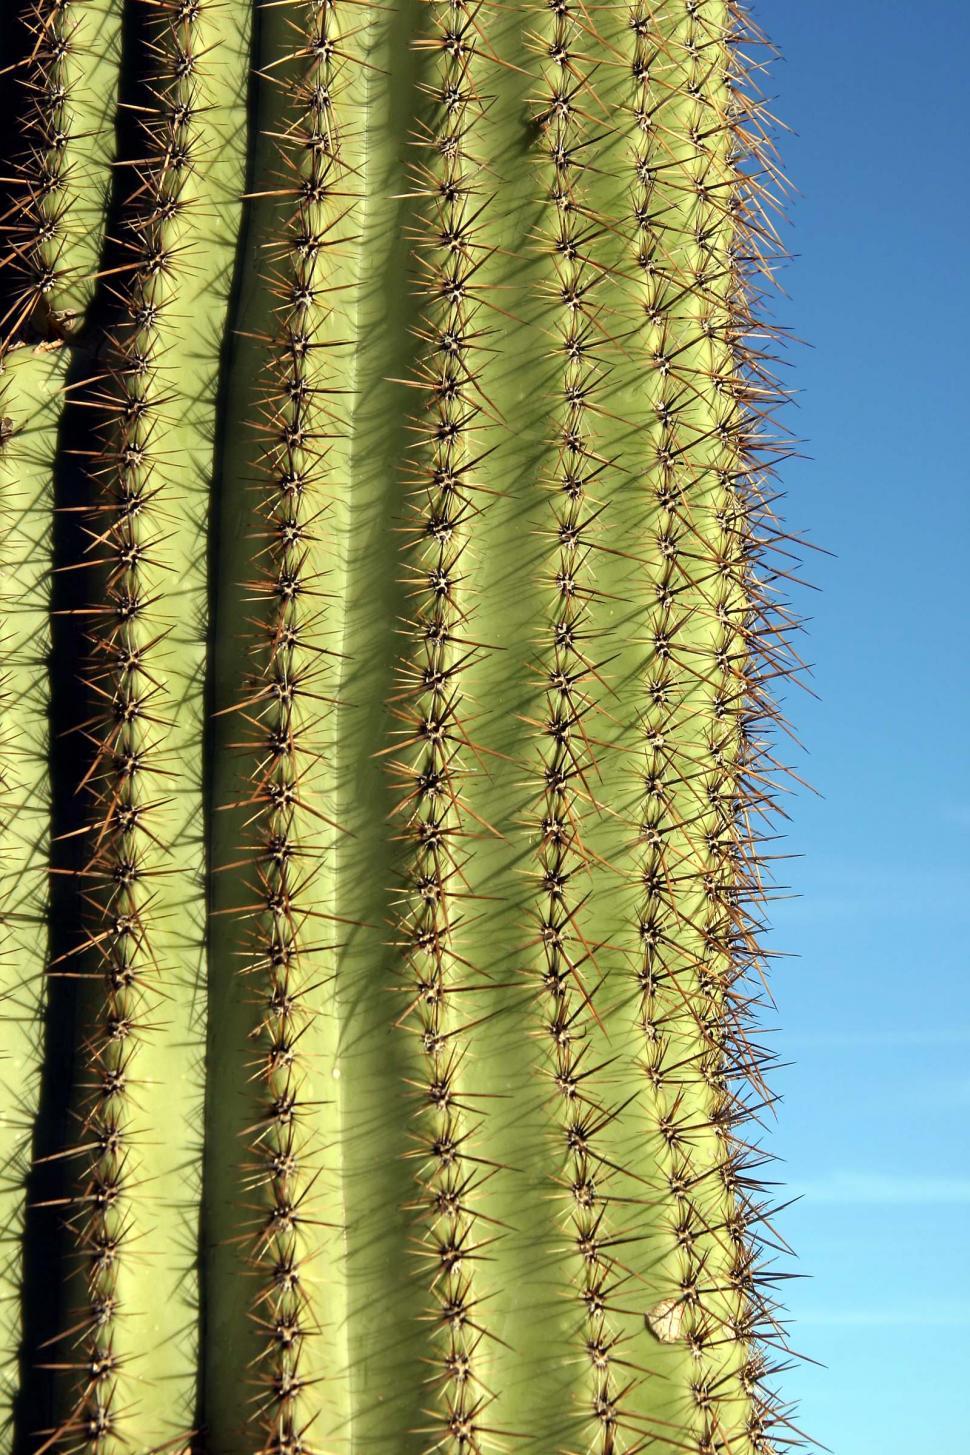 Free Image of sonoran desert tucson saguaro sahuaro cactus silhouette ribs needles spines thorns 